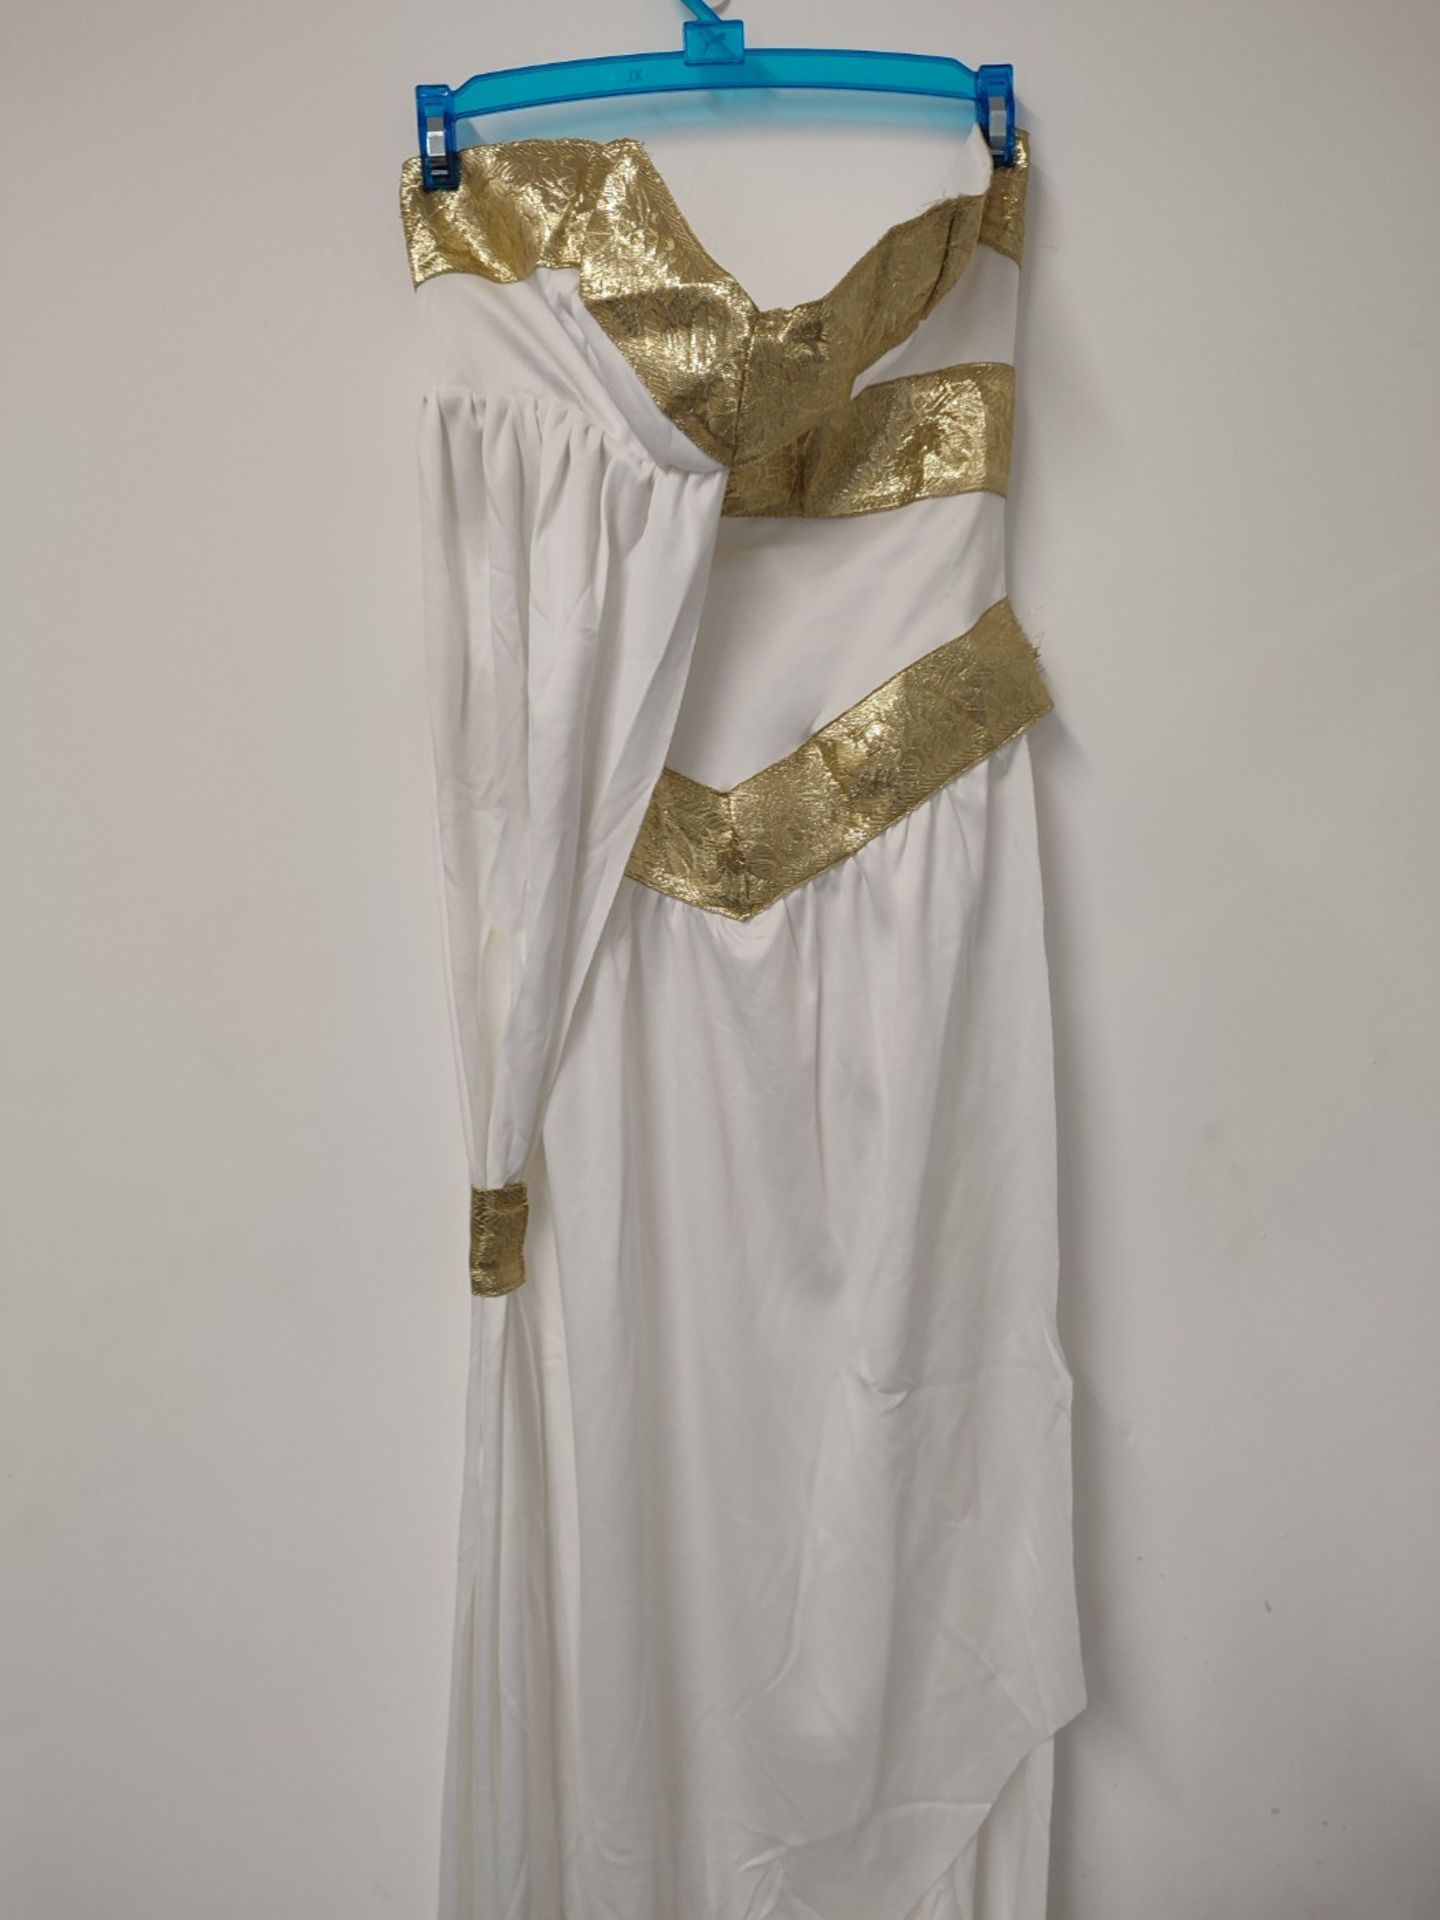 RRP £68.00 Leg Avenue 85578 White/Gold Goddess Fancy Dress Costume (Small/UK 6-8, 3-Piece), Size: - Image 2 of 3